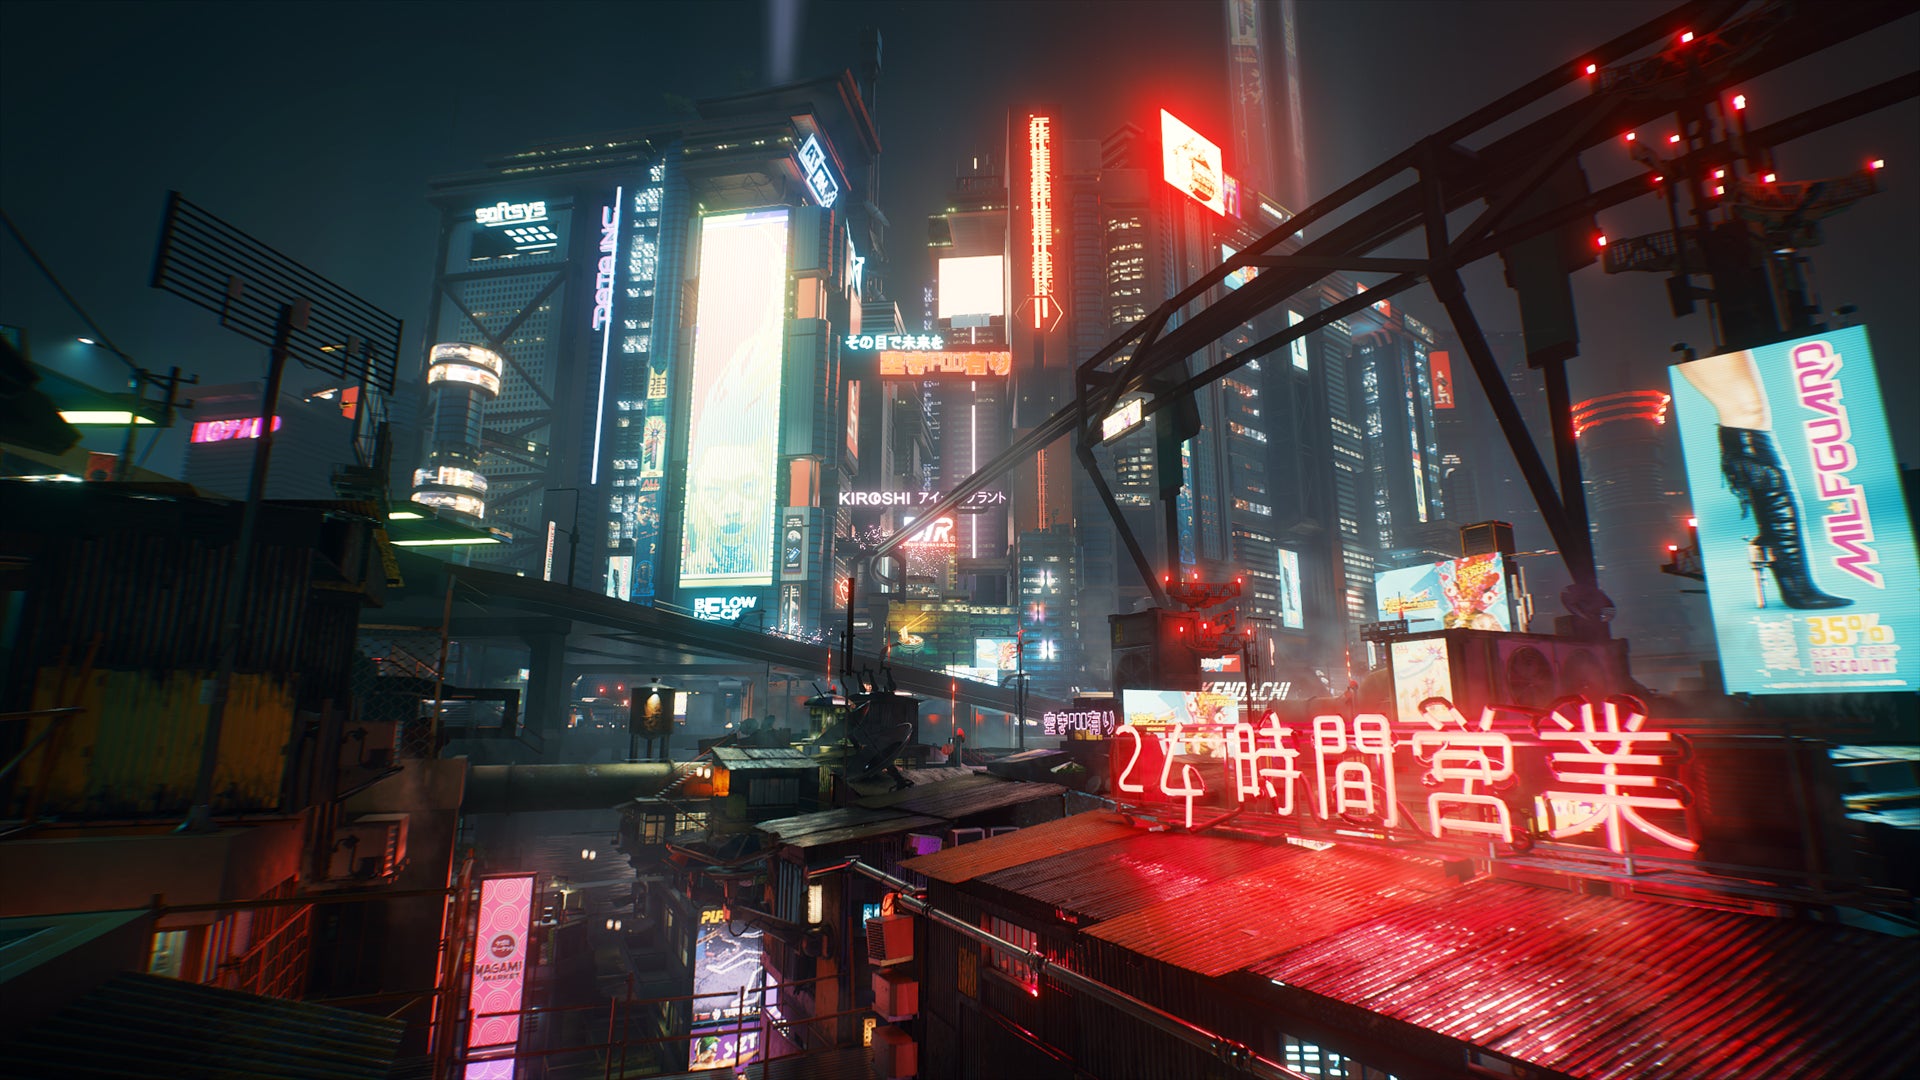 Slideshow: Cyberpunk 2077: 25 New Night City Image